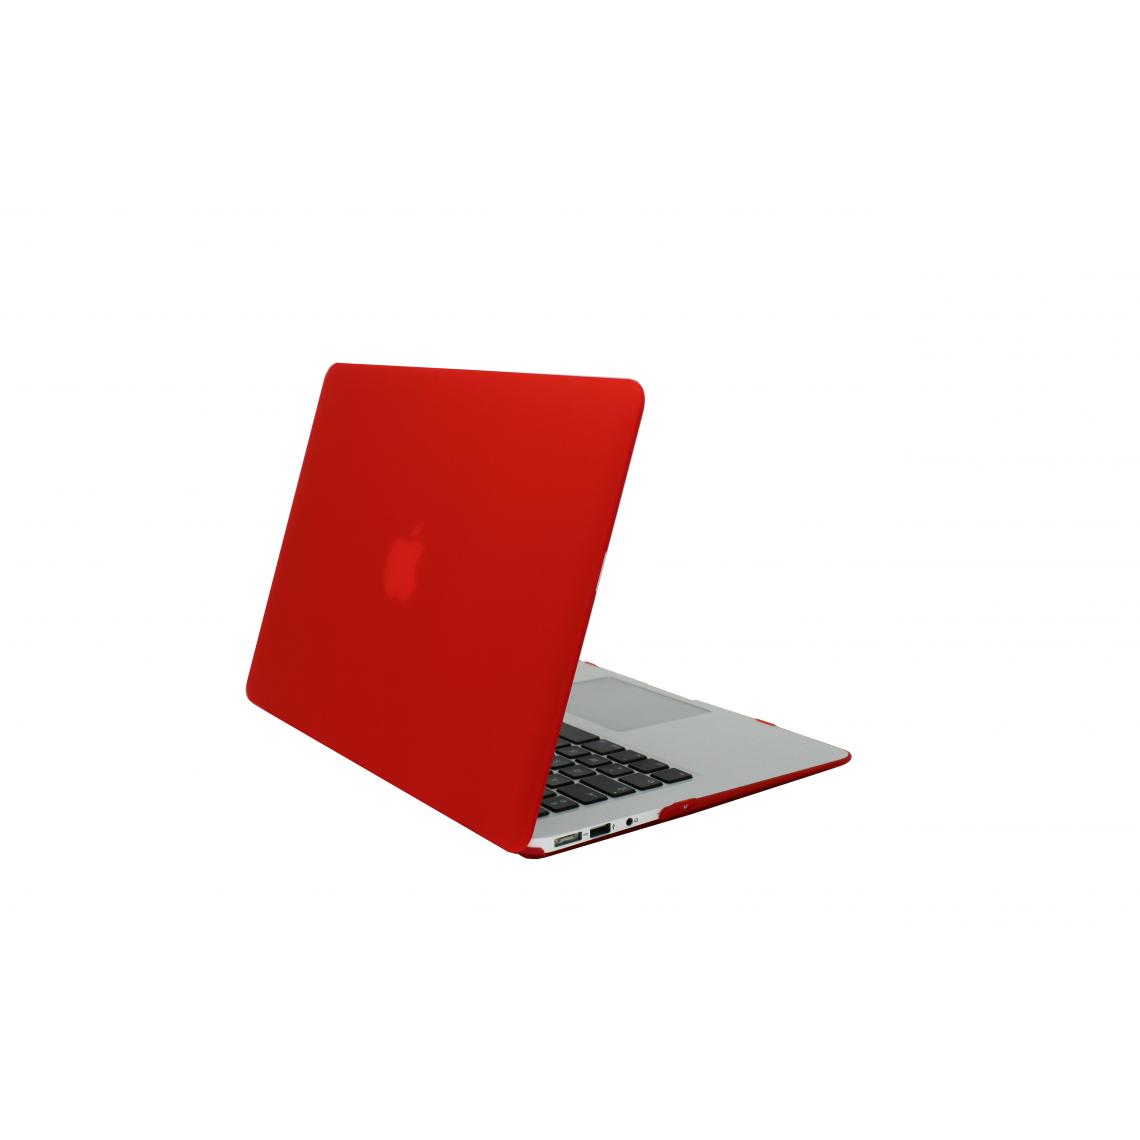 Apple - MacBook Air 13.3'' i5-5250U 4Go 128Go SSD - 2015 Coque Rouge - MacBook